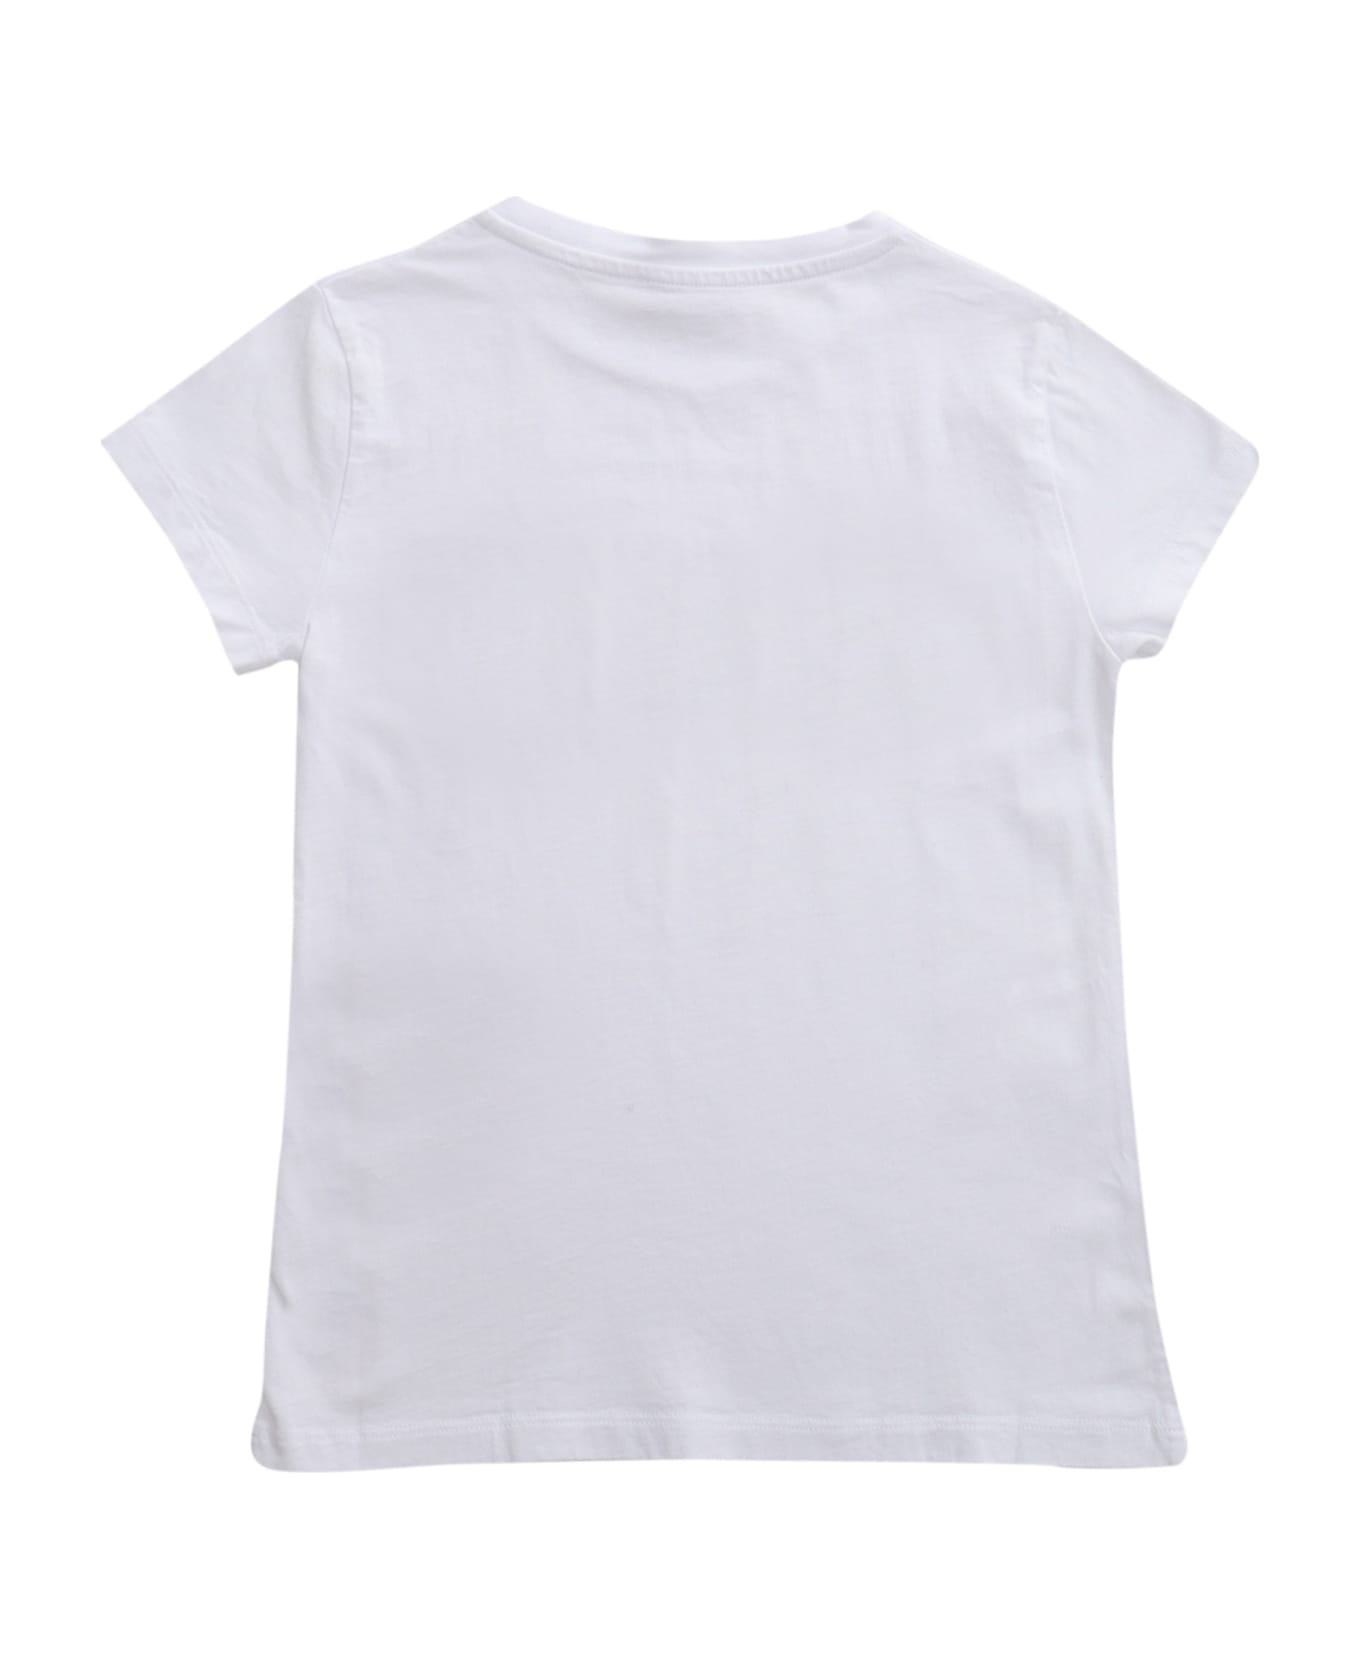 Golden Goose Crystal T-shirt - WHITE